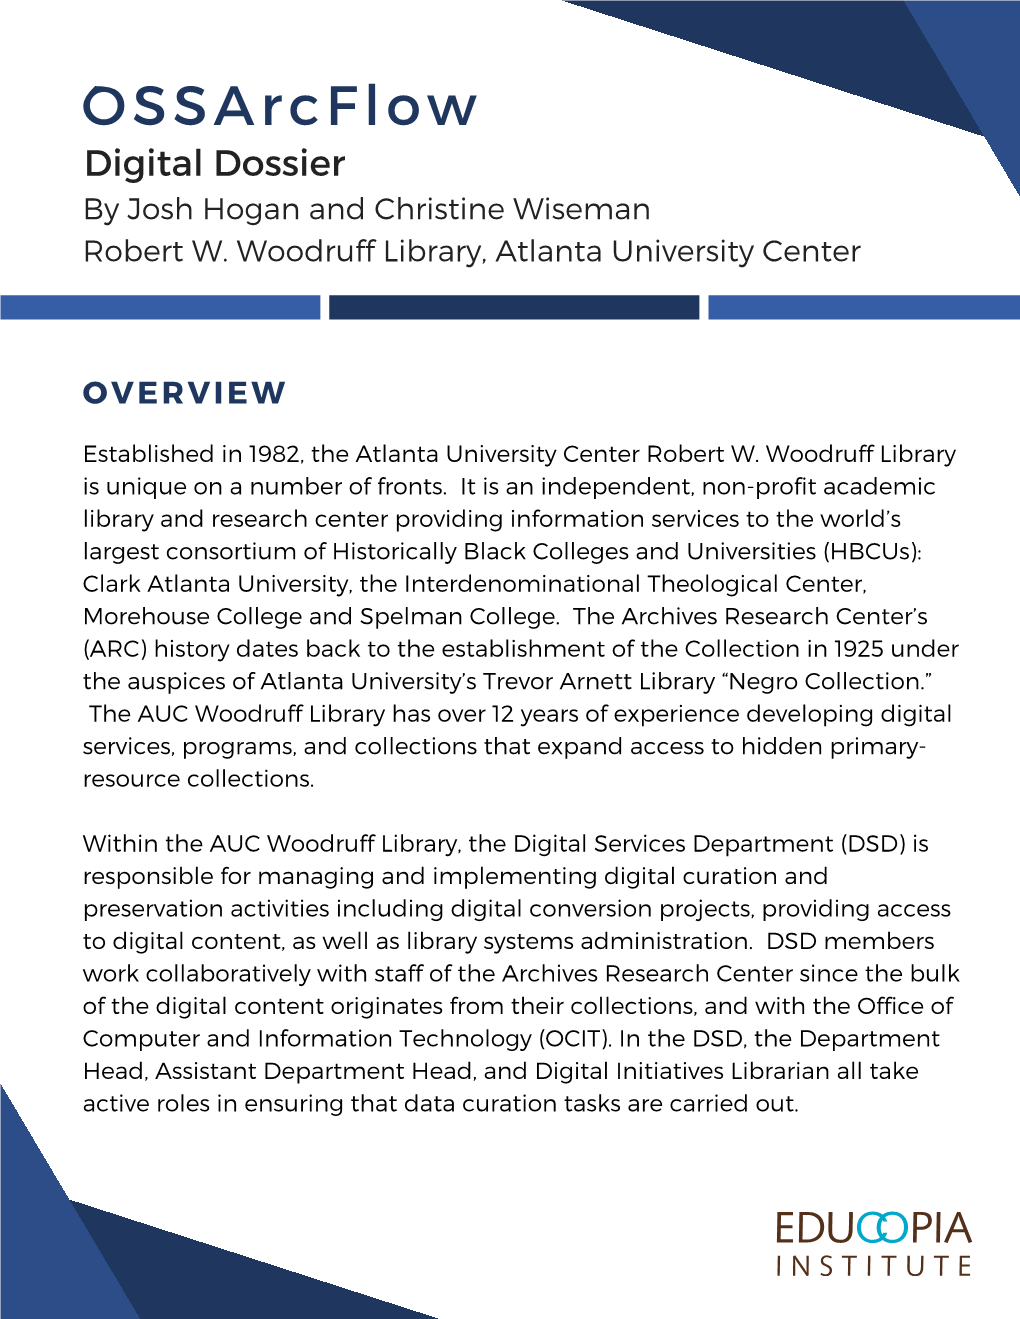 Ossarcflow Digital Dossier by Josh Hogan and Christine Wiseman Robert W